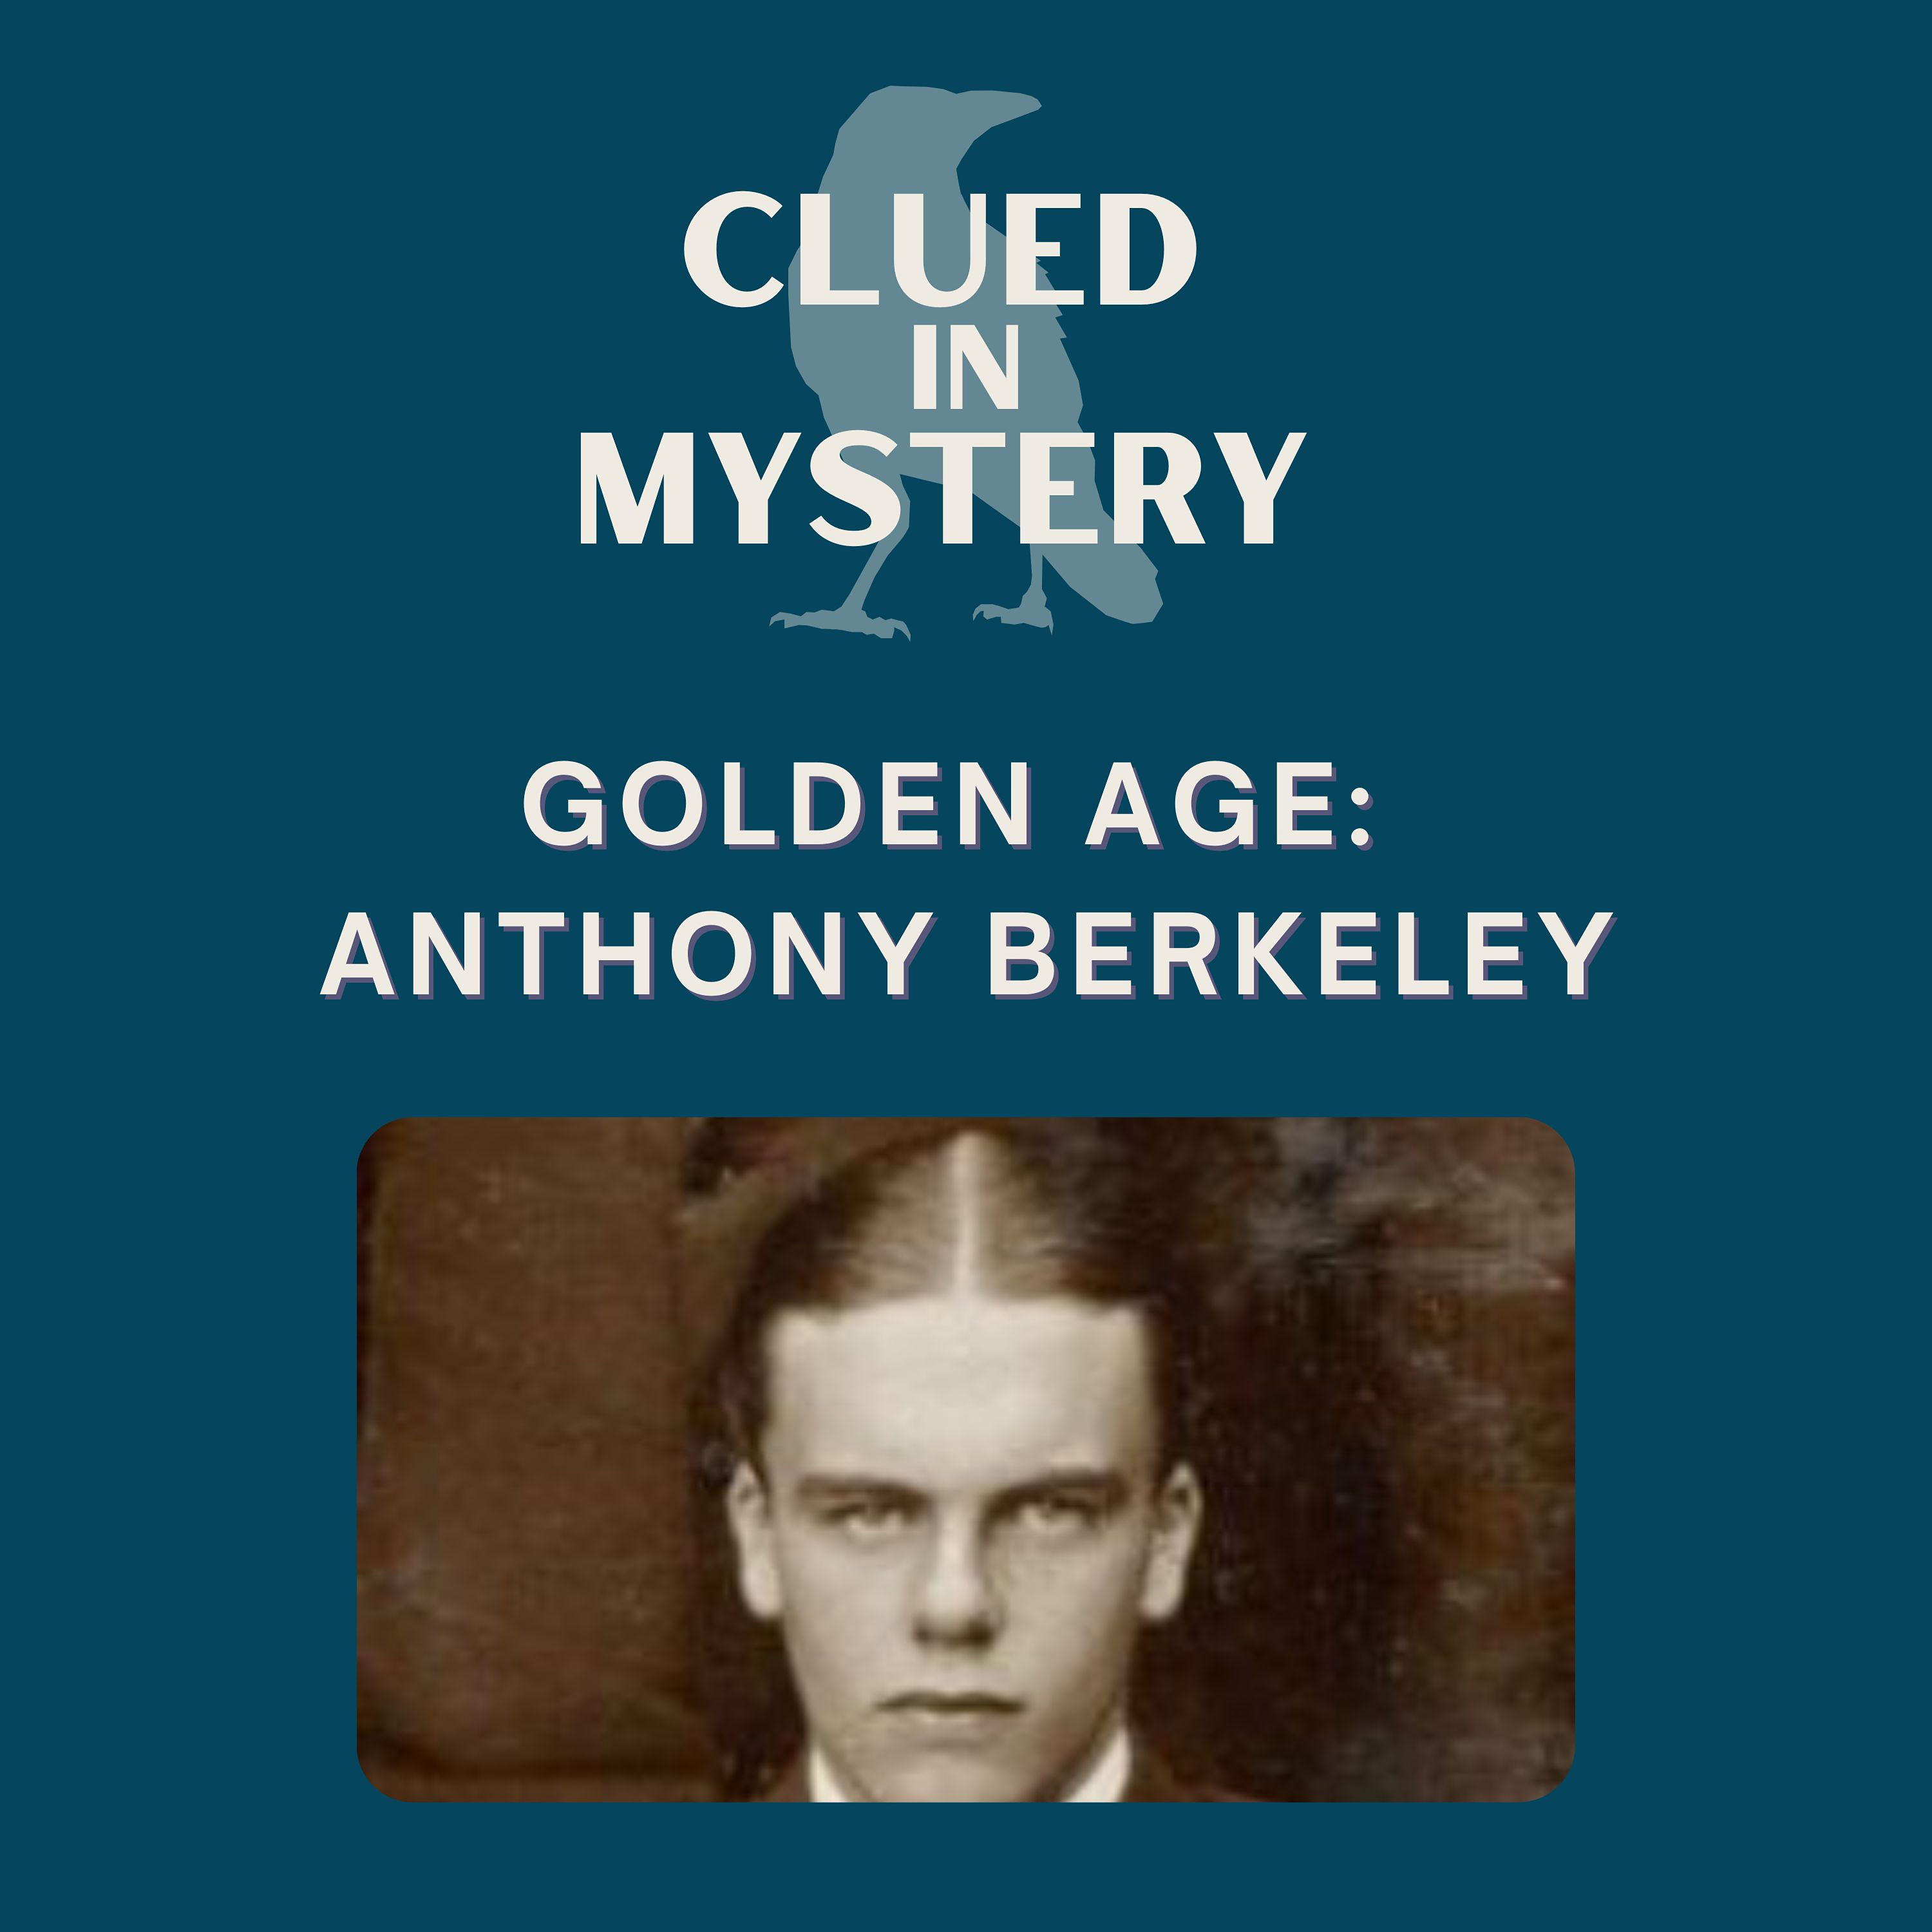 Golden Age Author Anthony Berkeley